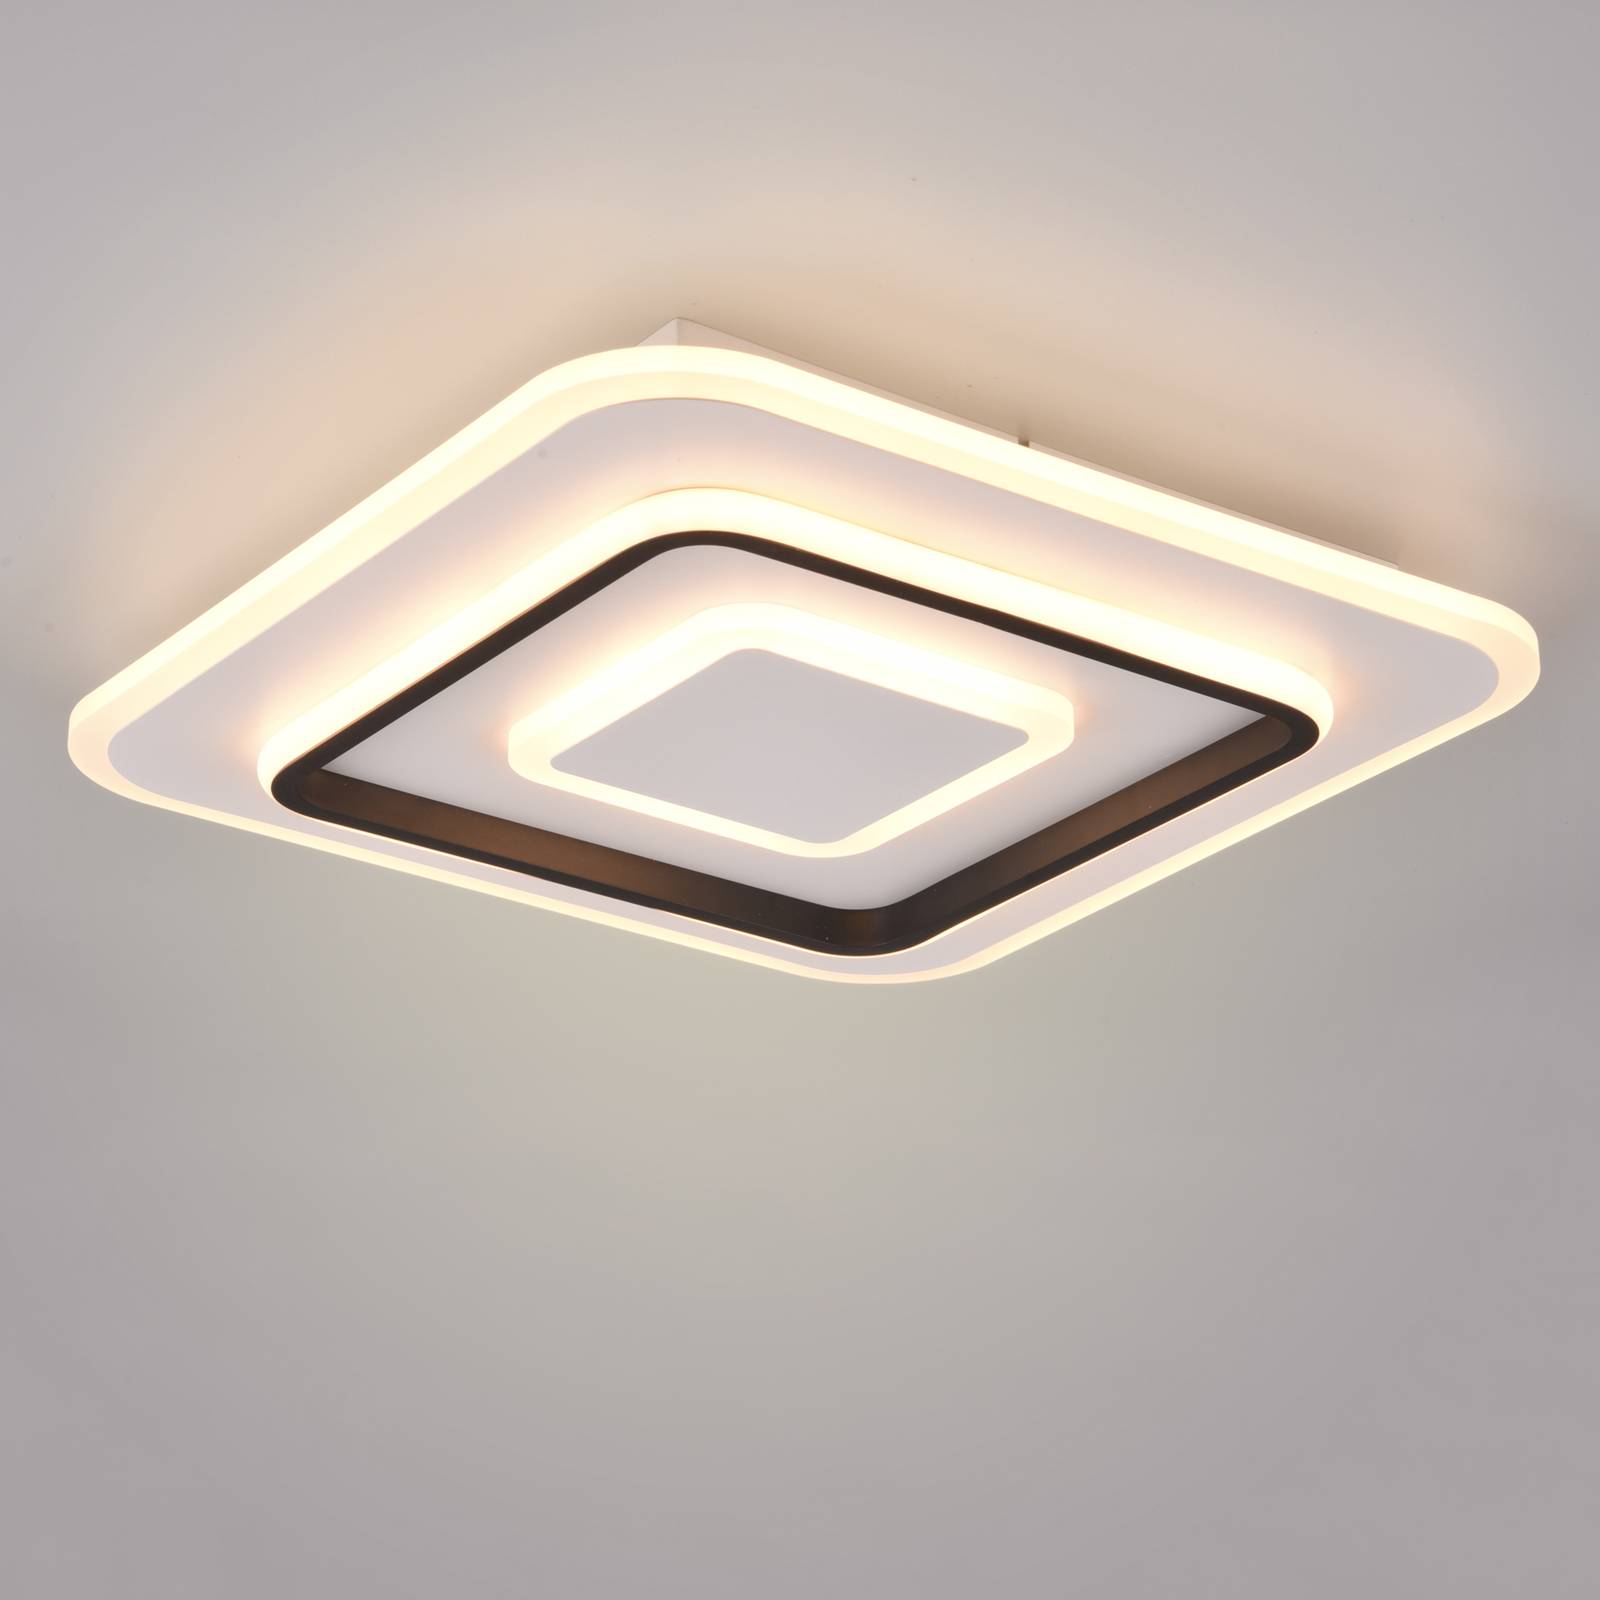 Image of Reality Leuchten Plafonnier LED Jora angulaire, 39,5 x 39,5 cm 4017807574814